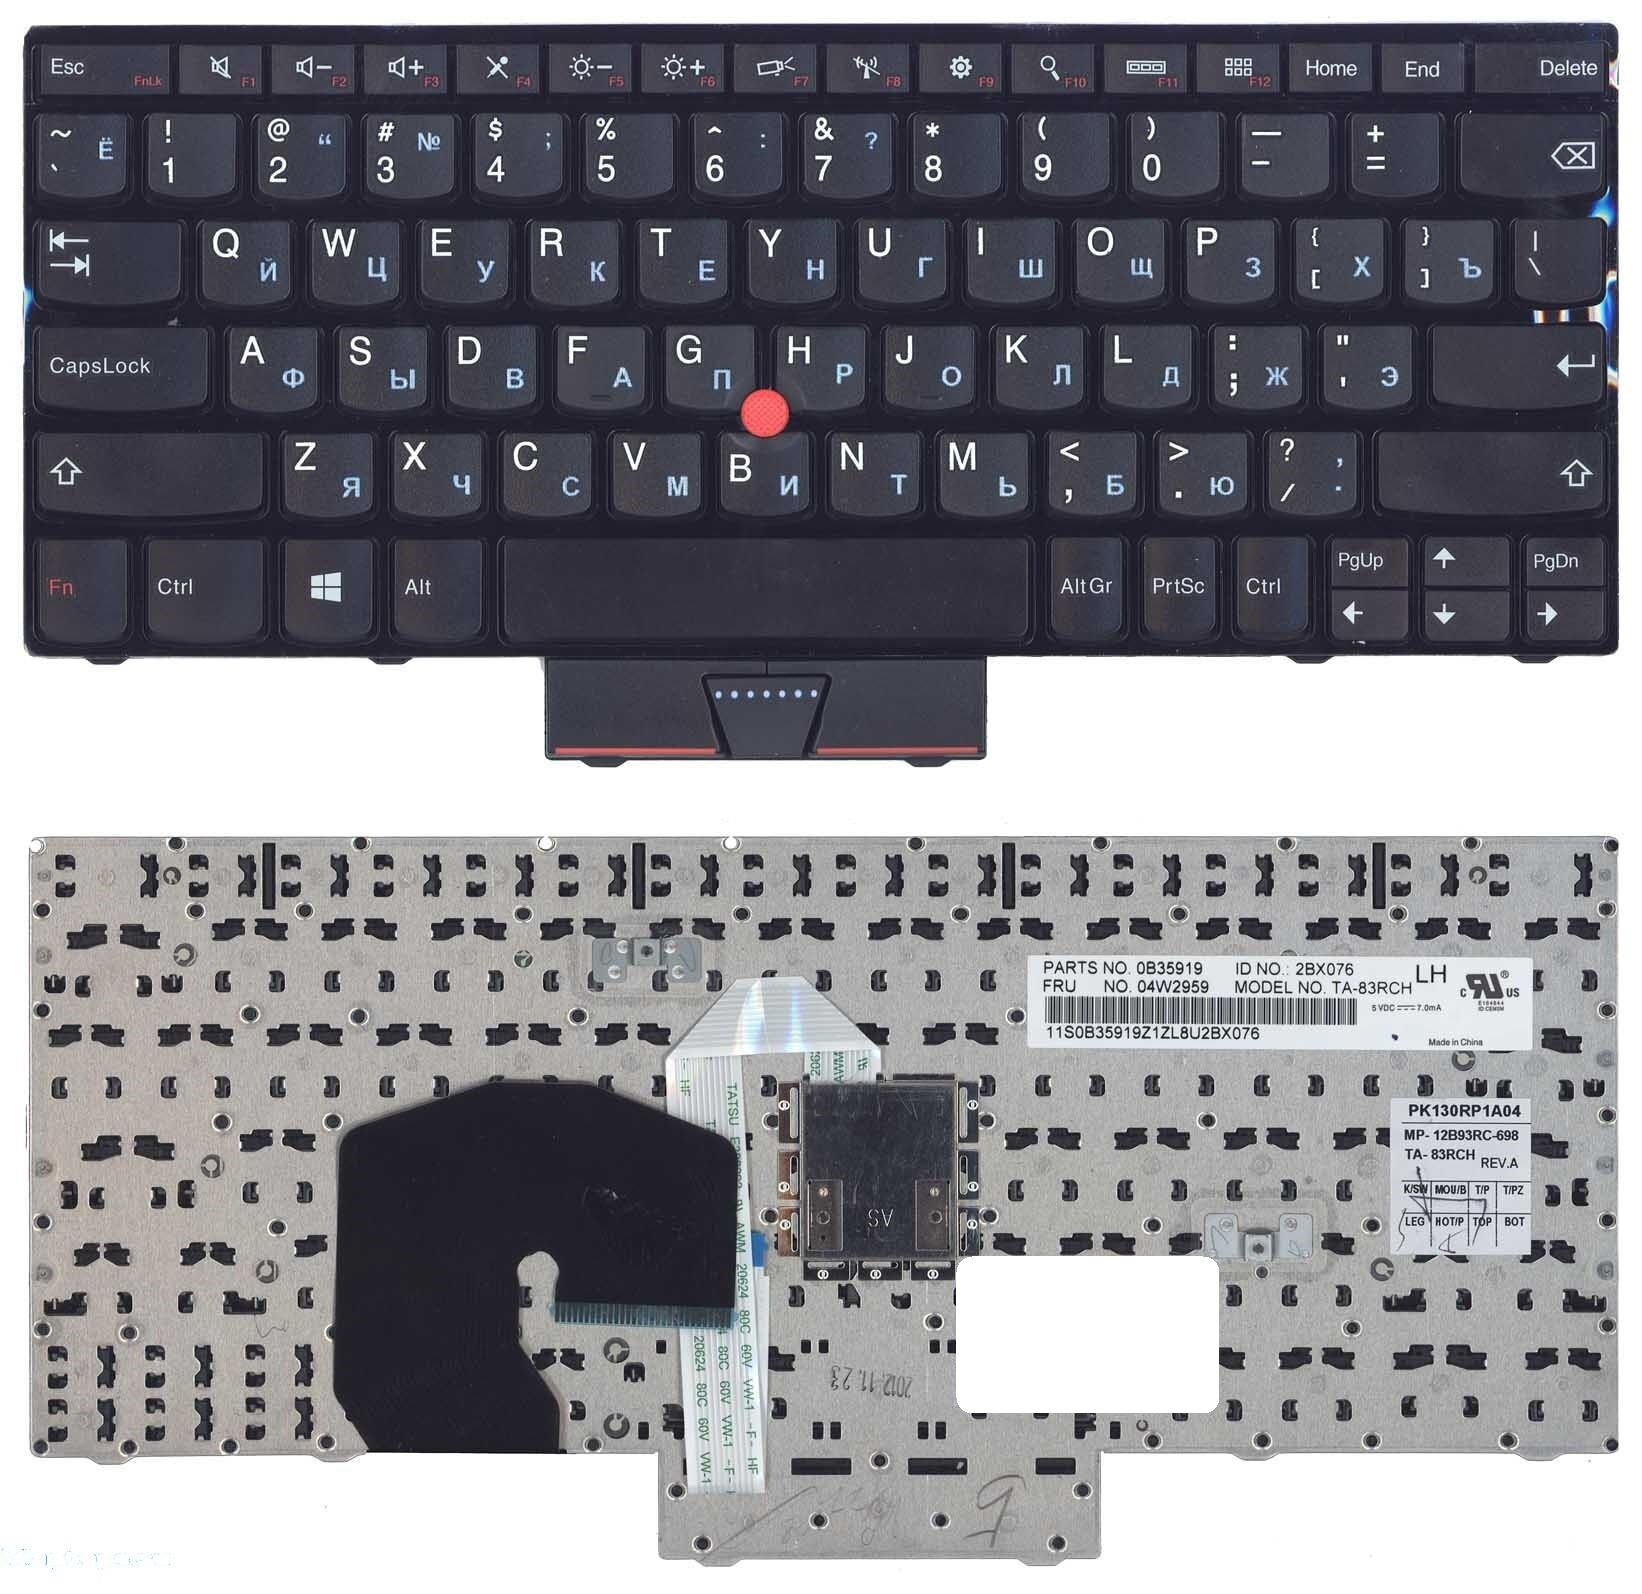 Клавиатура для ноутбука Lenovo S230u S230 s230i p/n: 04W2927, 0B35887, PK130RP1A35, MP-12B93SU-698